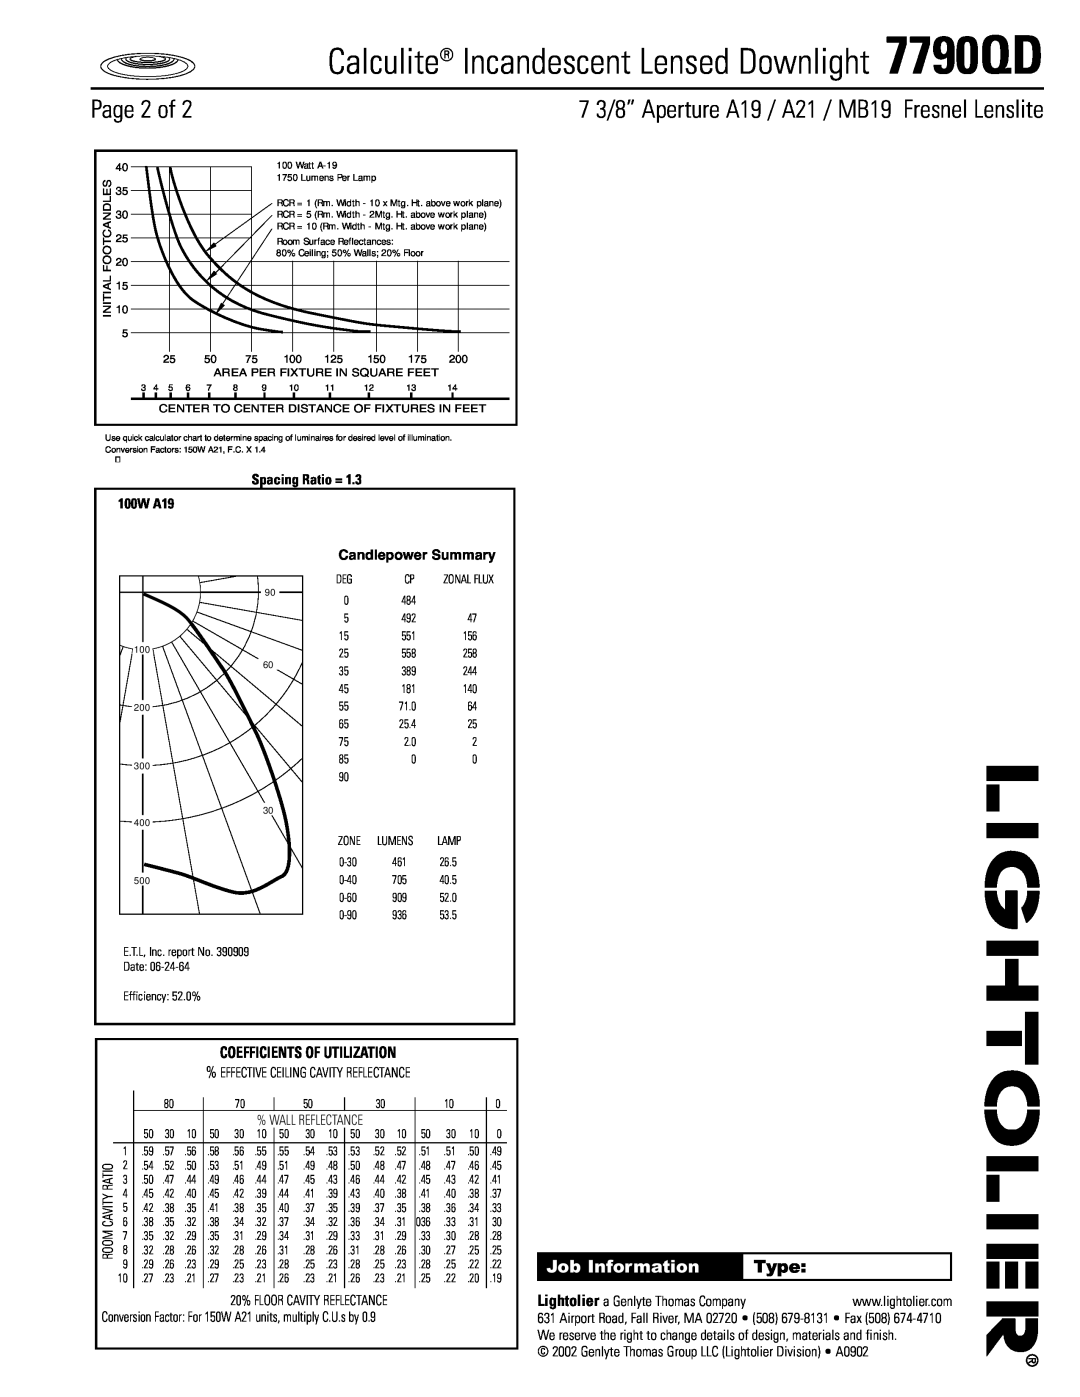 Lightolier 7790QD Page 2 of, 7 3/8” Aperture A19 / A21 / MB19 Fresnel Lenslite, Job Information, Type, Spacing Ratio = 